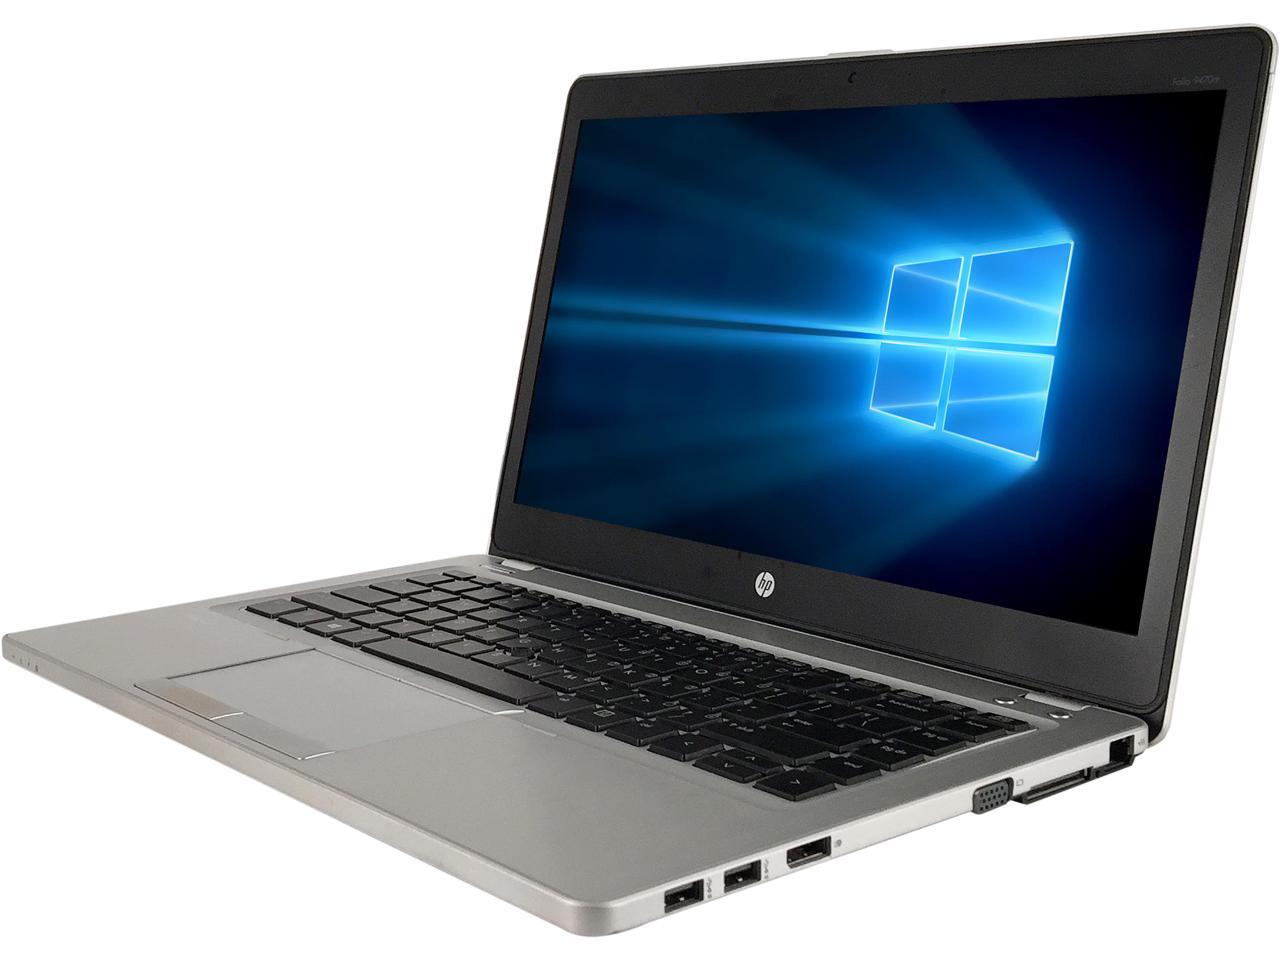 HP Elitebook Folio 9470m Laptop, i5-3437U 1.90GHz CPU, 4GB RAM, 500GB ...